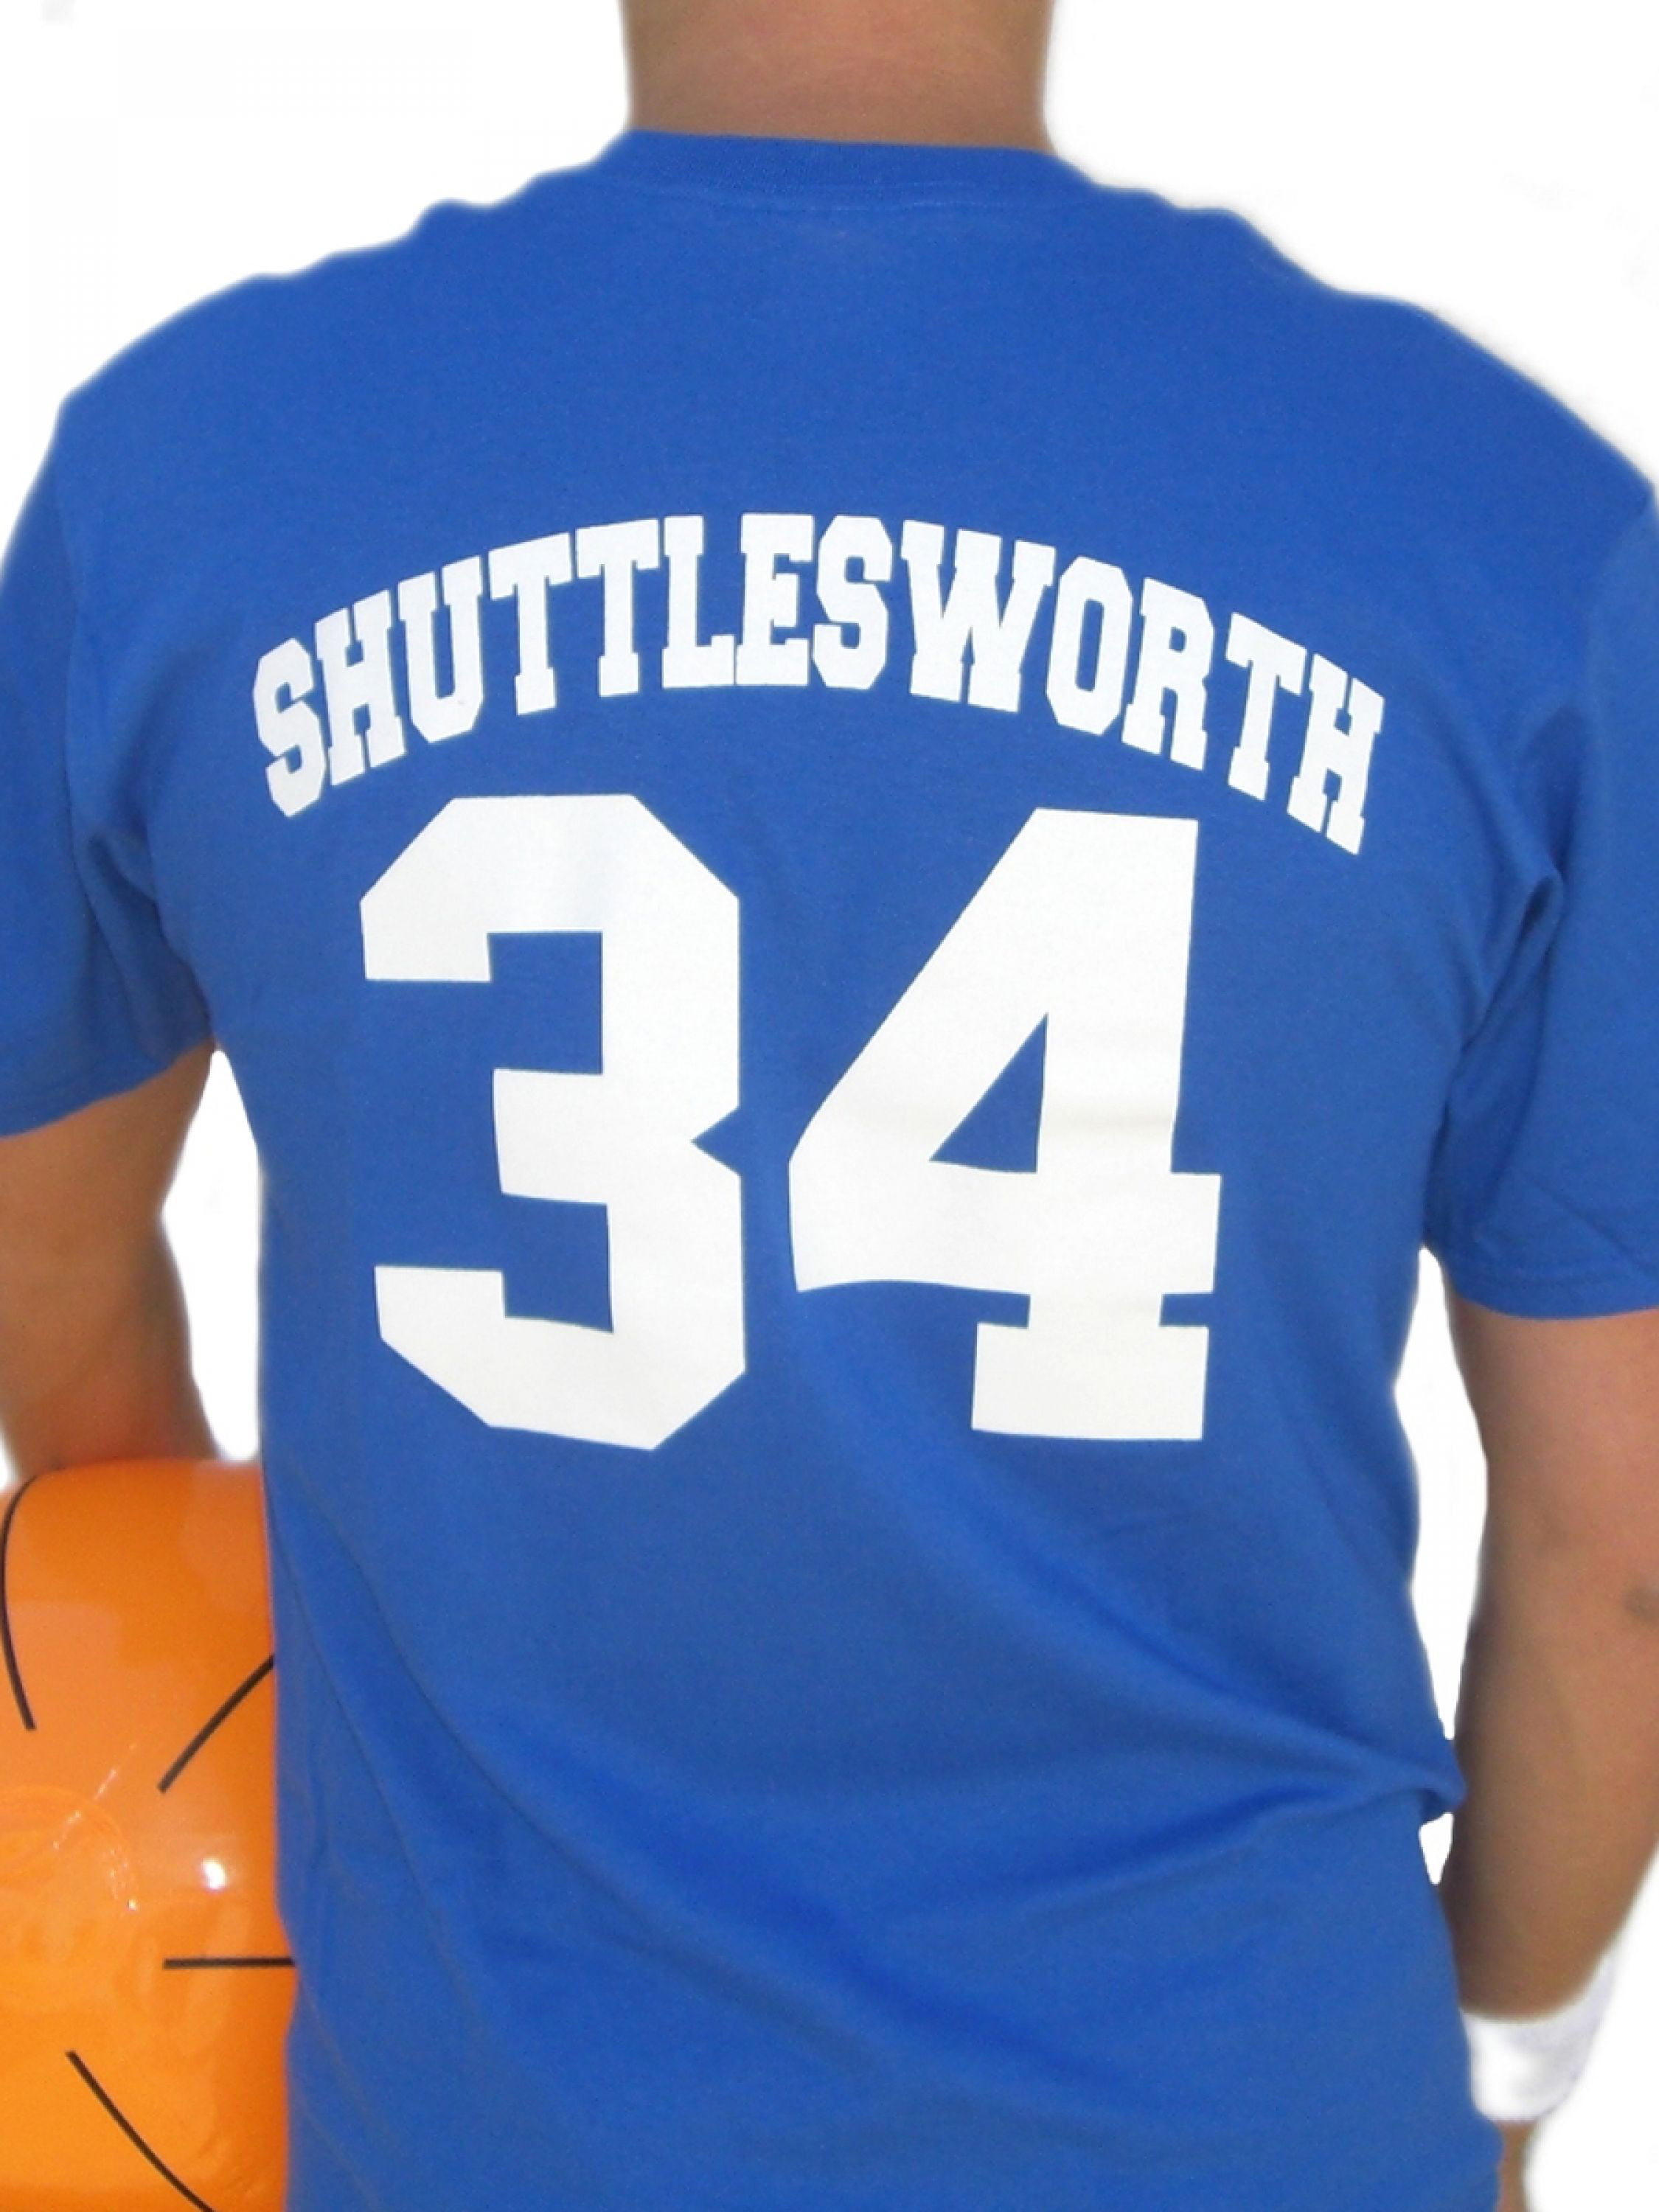 34 Lincoln High School tee shirt worn by Jesus Shuttlesworth (Ray